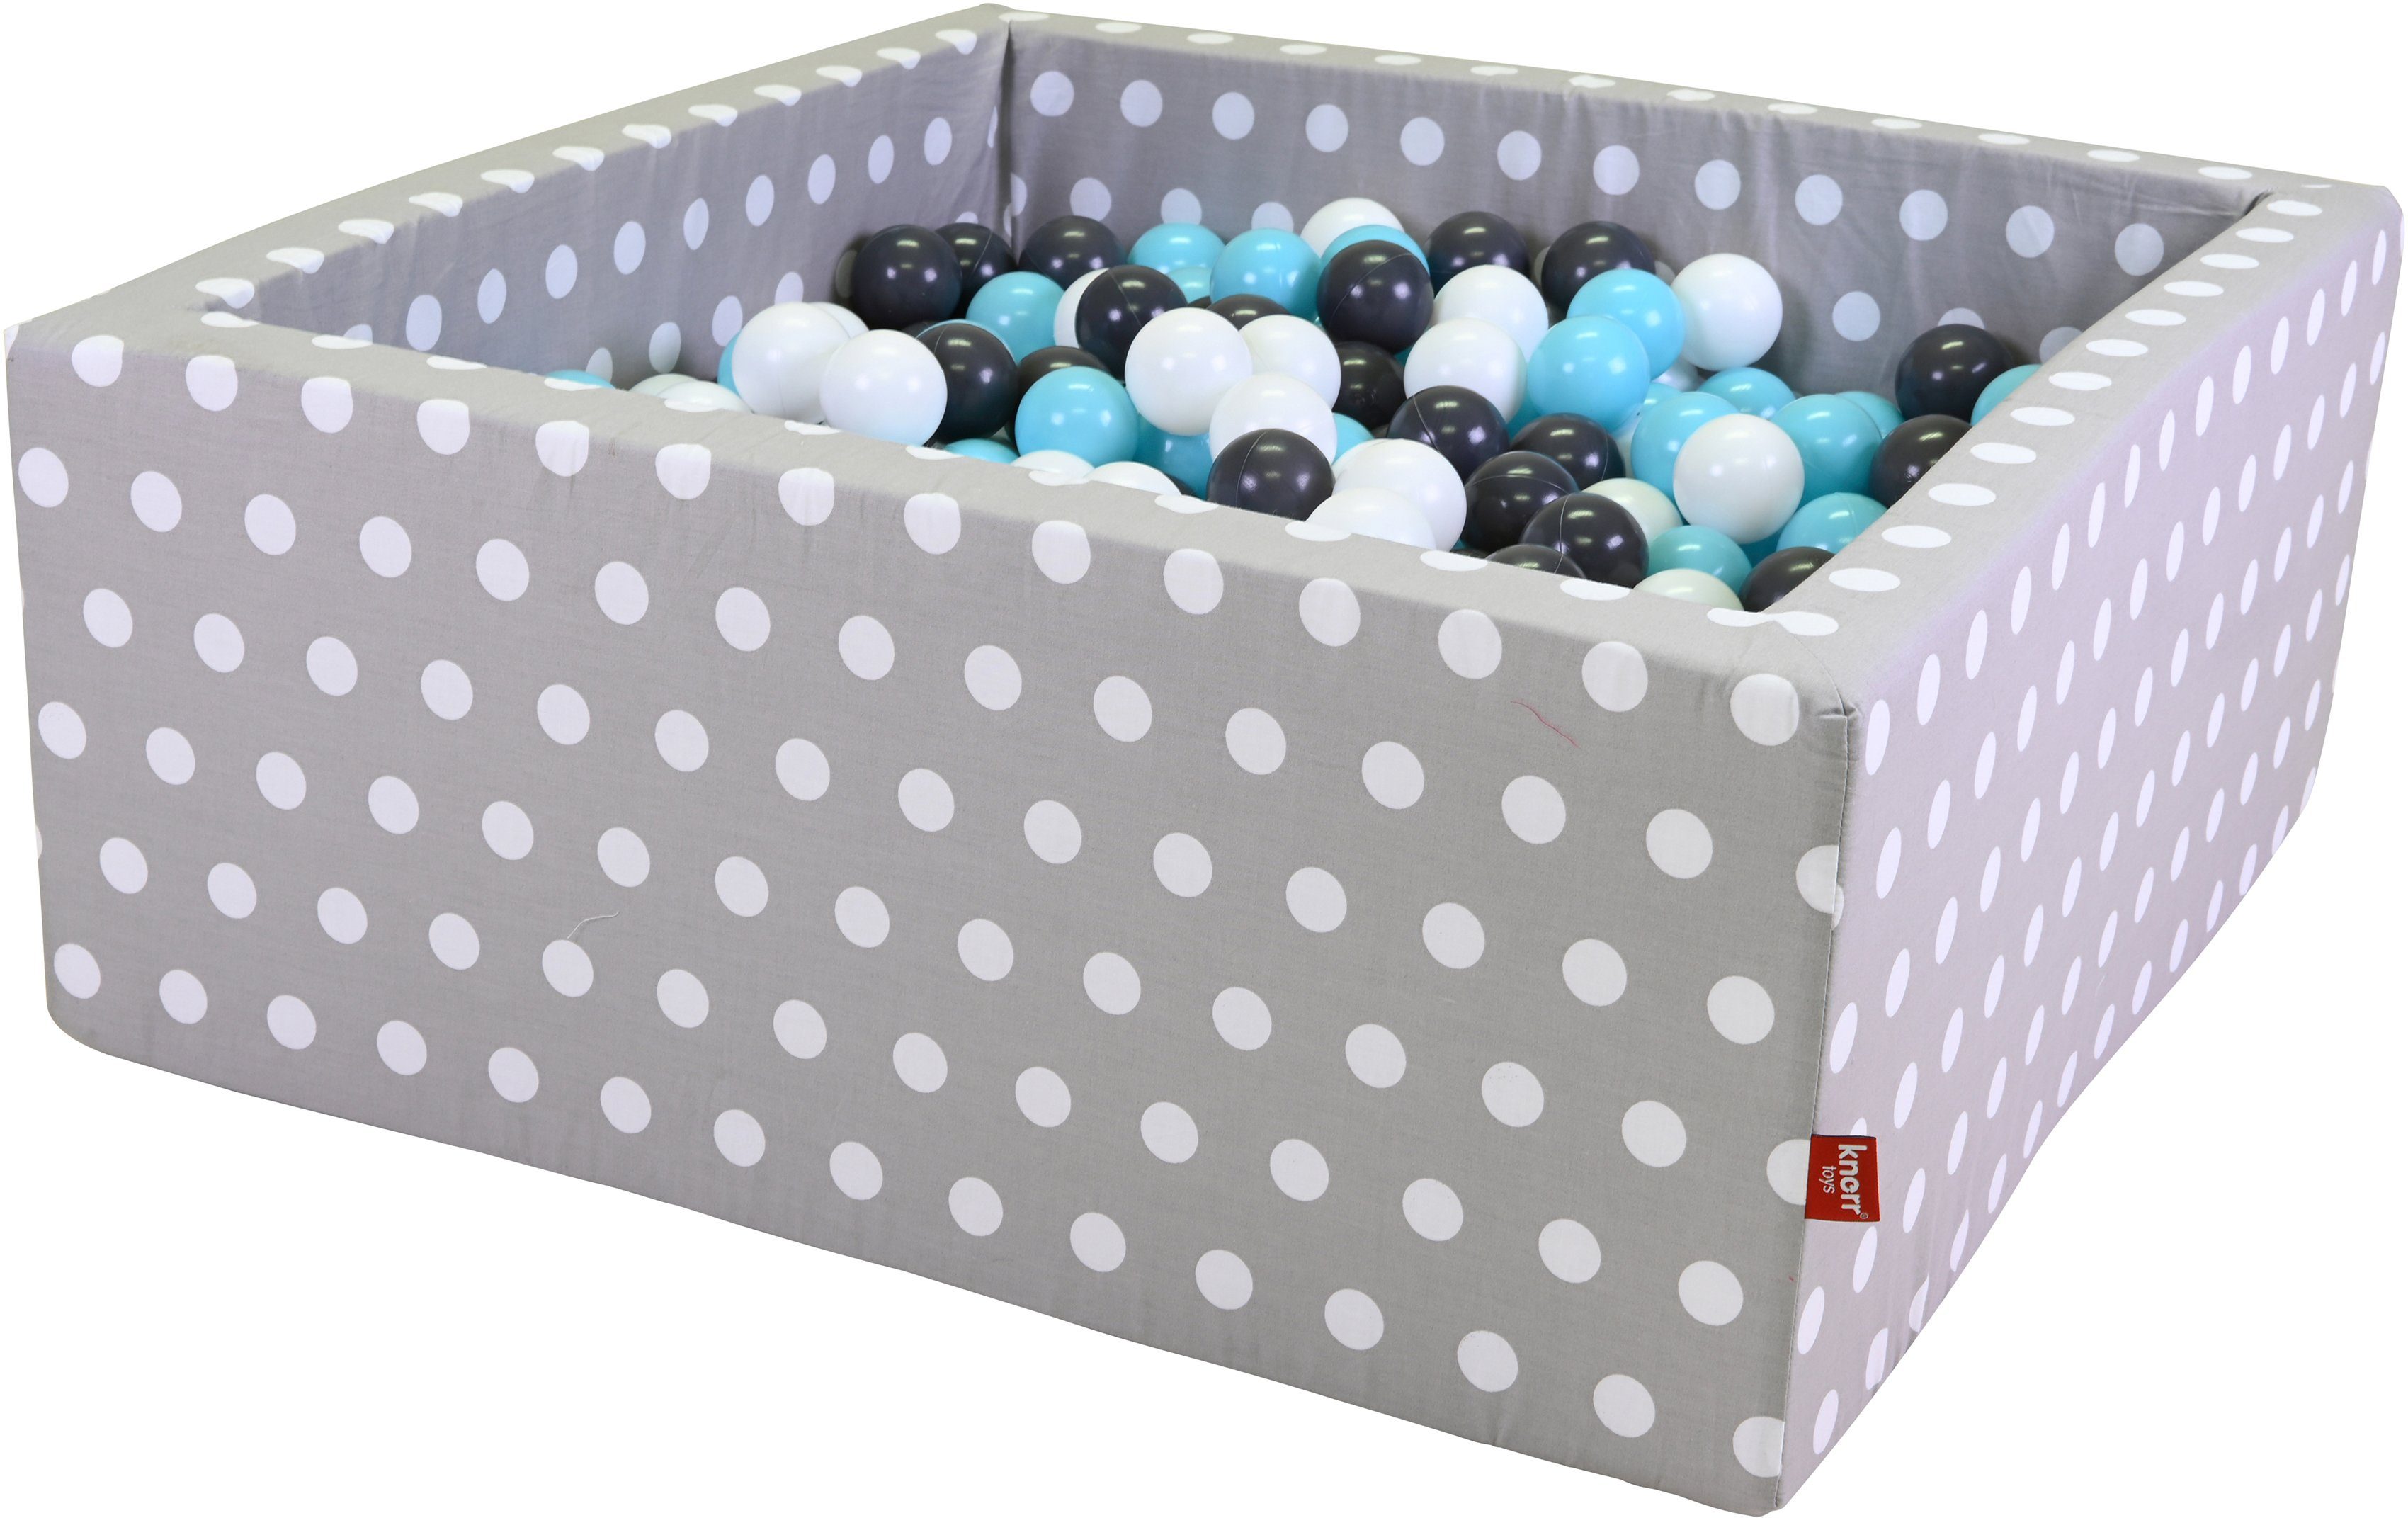 Knorrtoys® Ballenbak Soft, Grey white dots hoekig met 100 ballen crème/grey/light-blue, made in europe